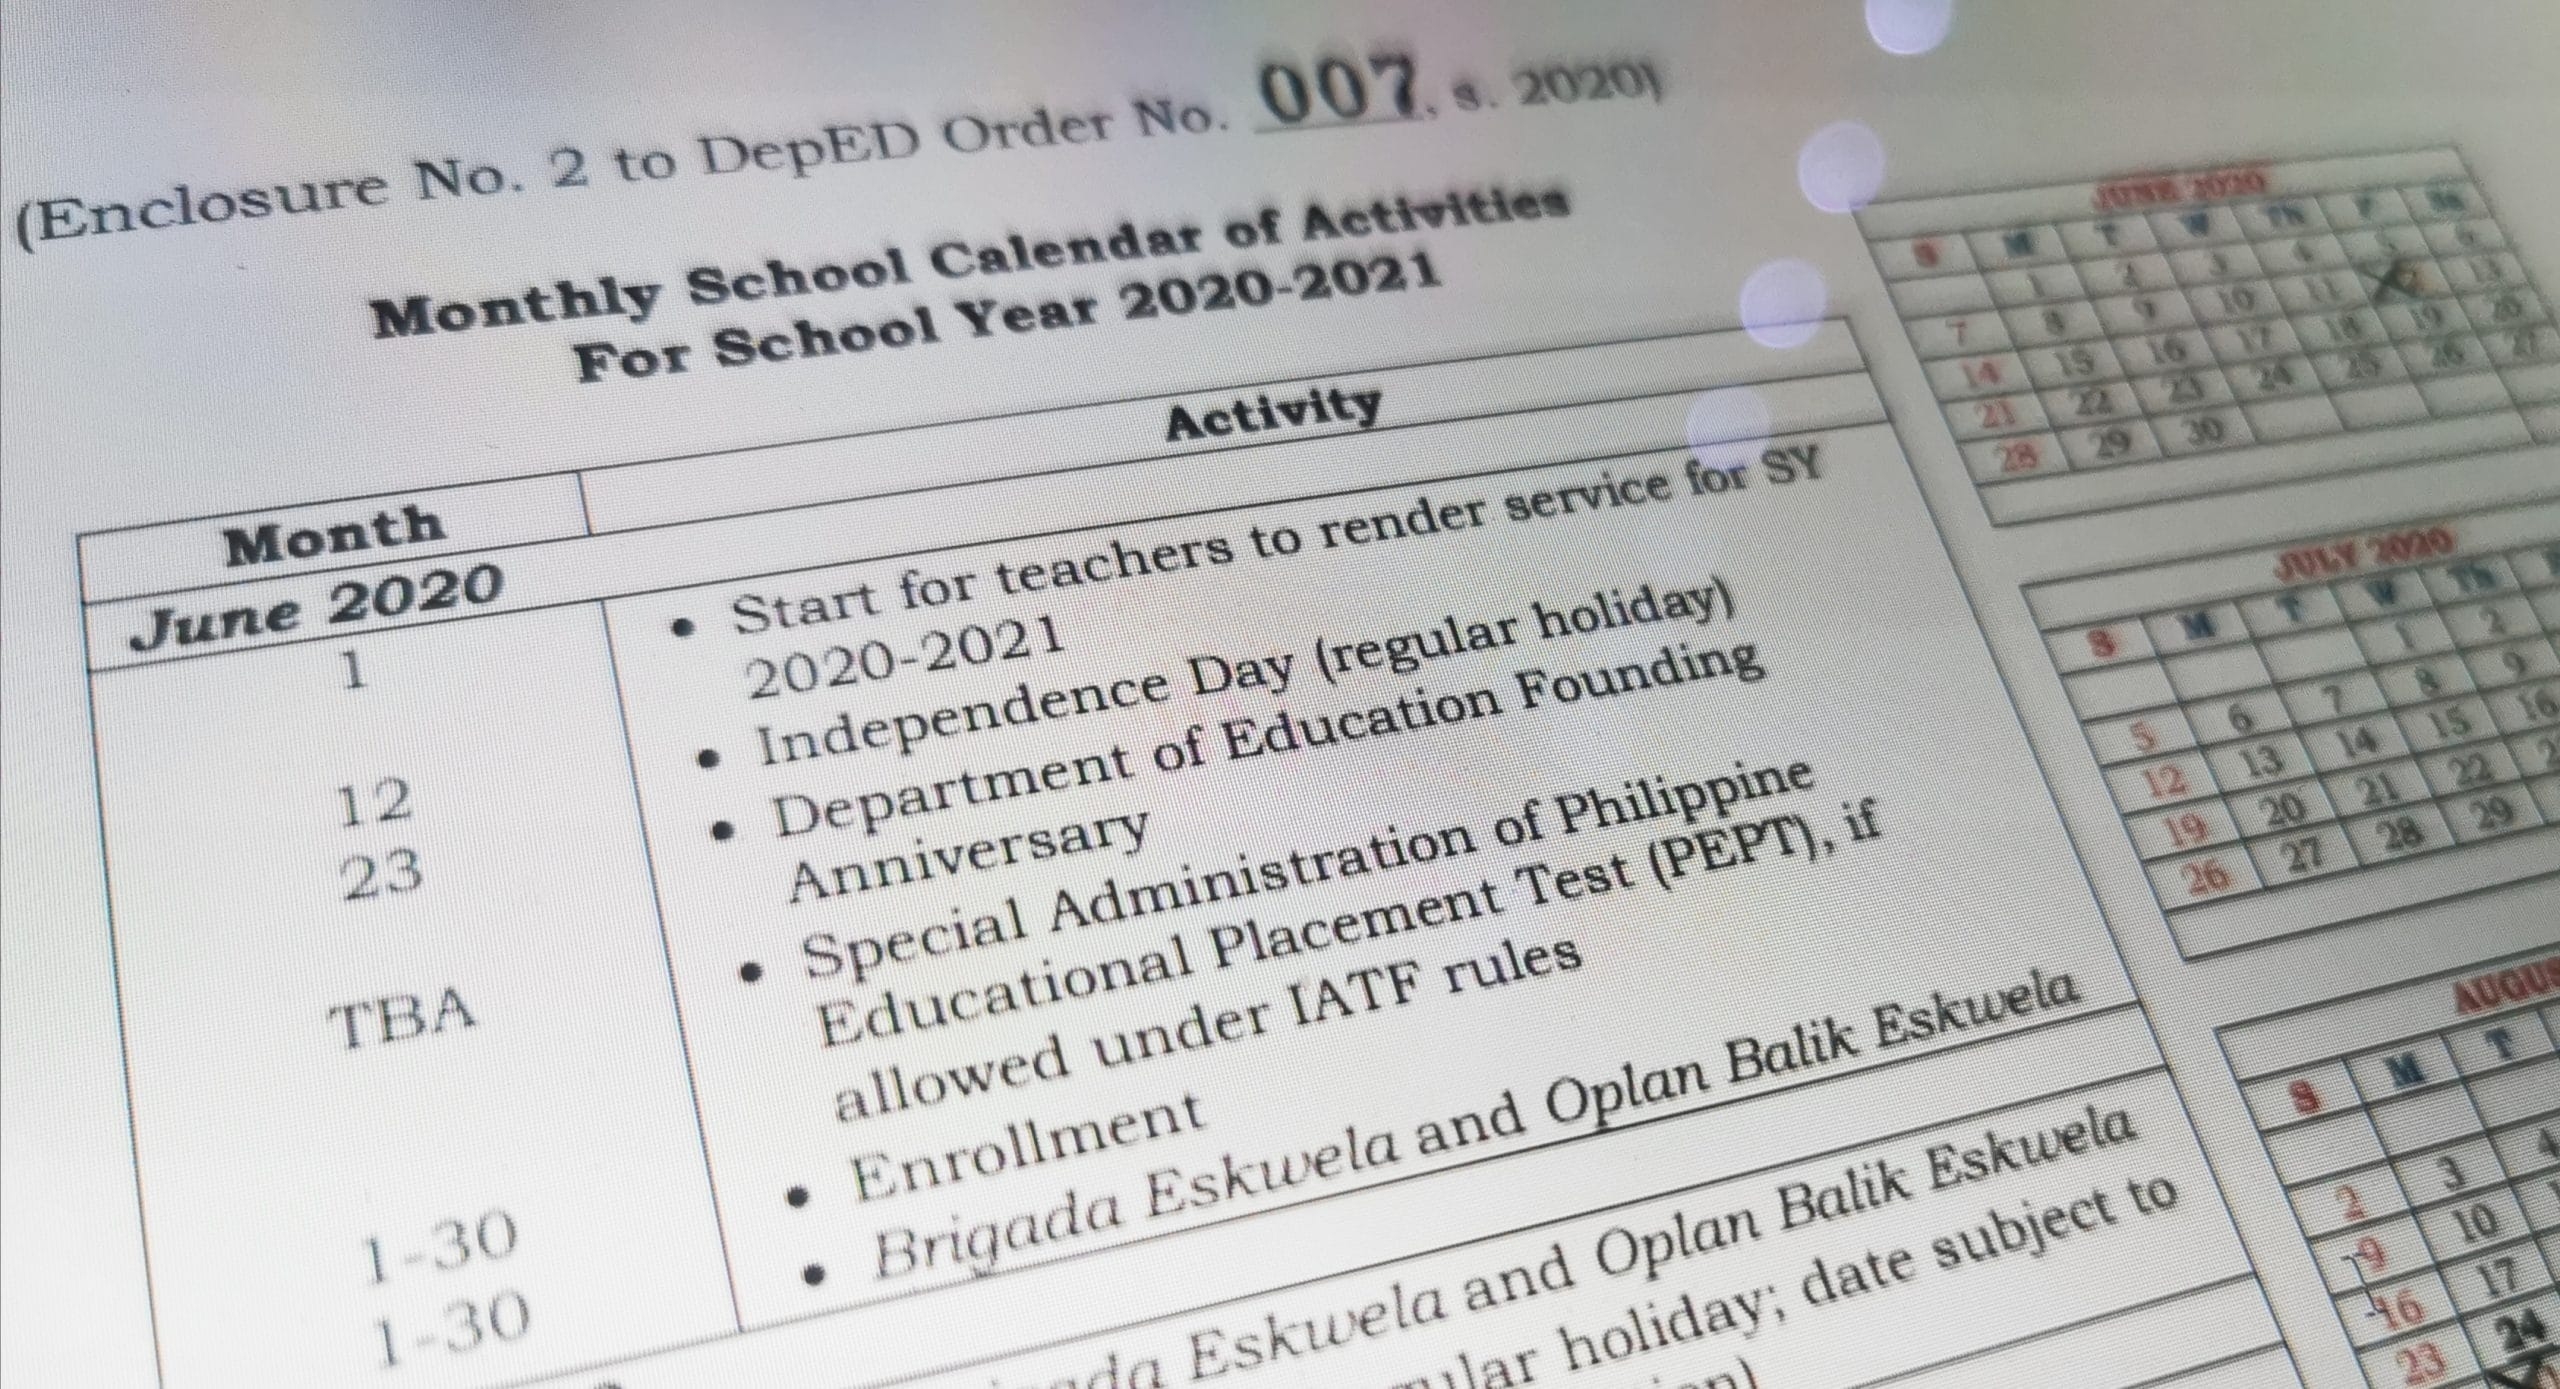 Deped Releases School Calendar For Sy 2020-2021 - Buhay Teacher Deped Calendar Of Activities October 2020 To 2021